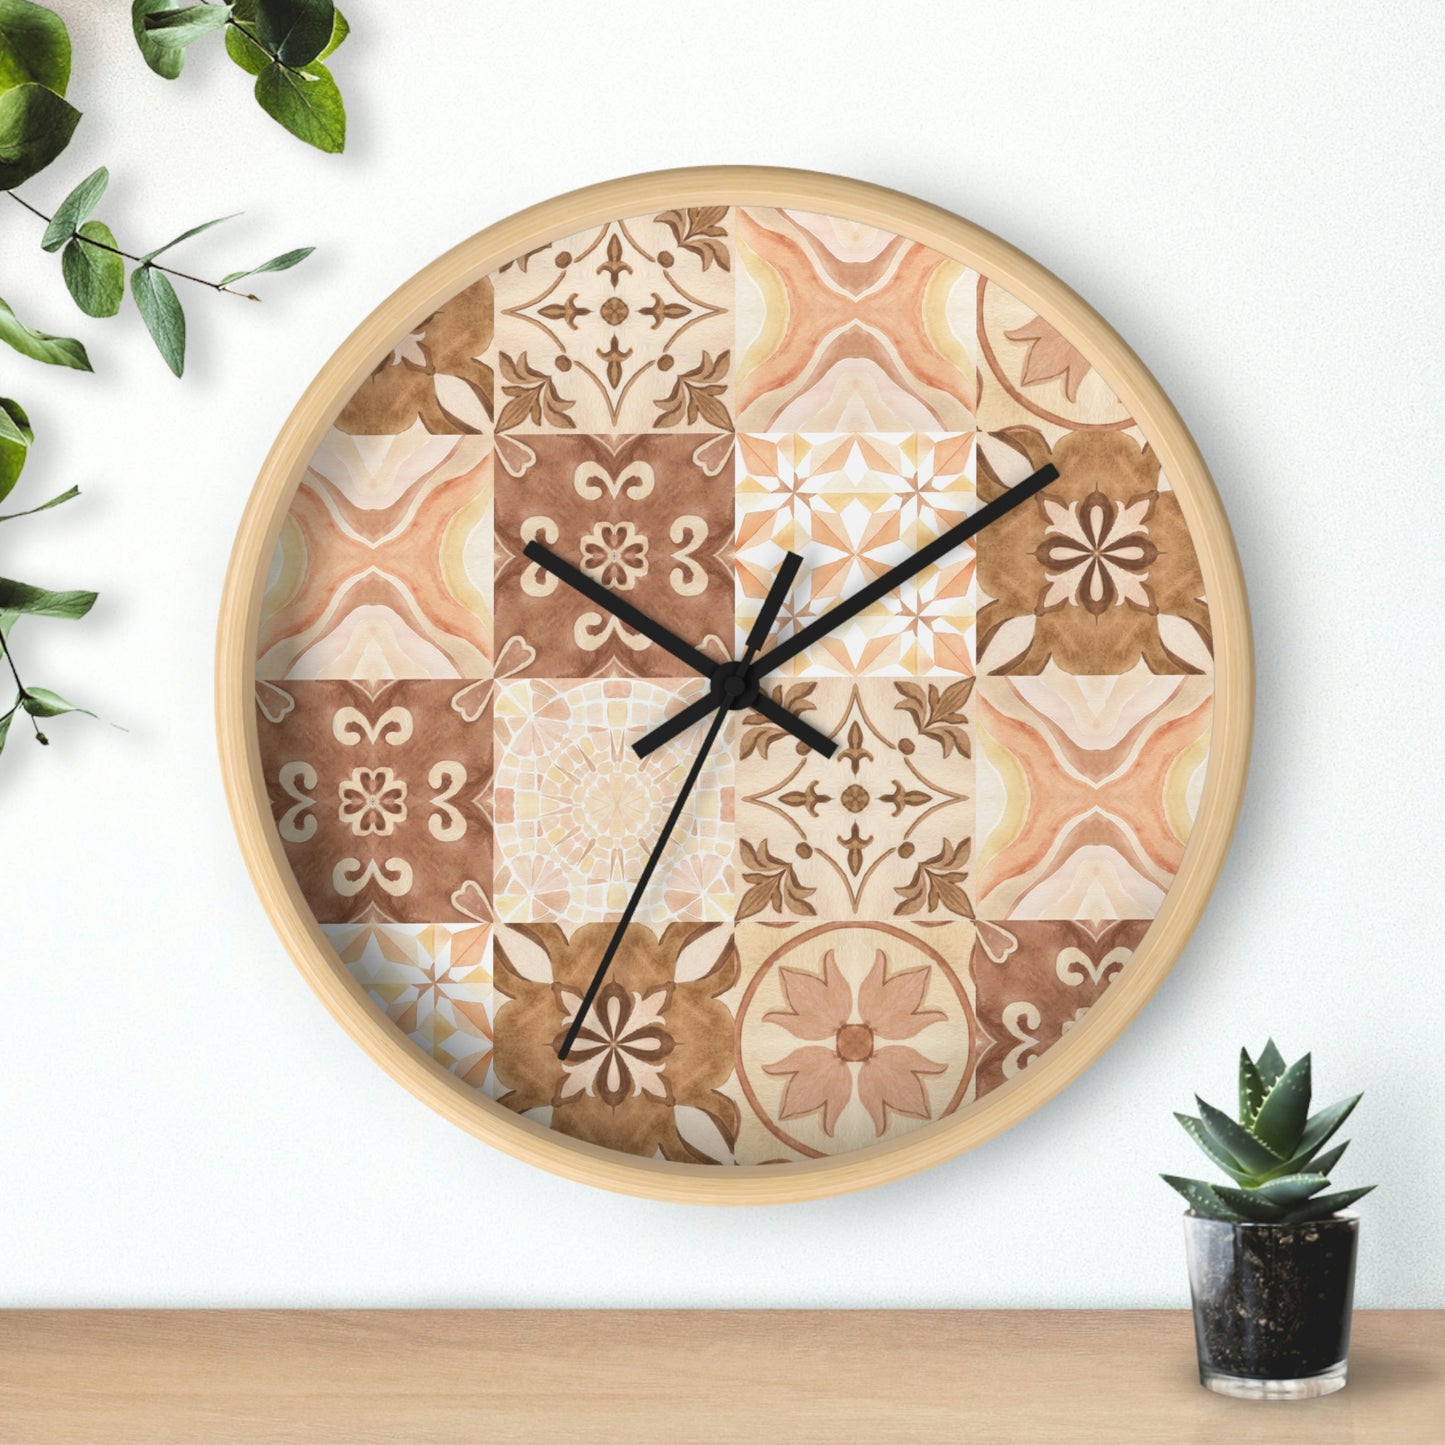 Moroccan Desert Tile Wall Clock